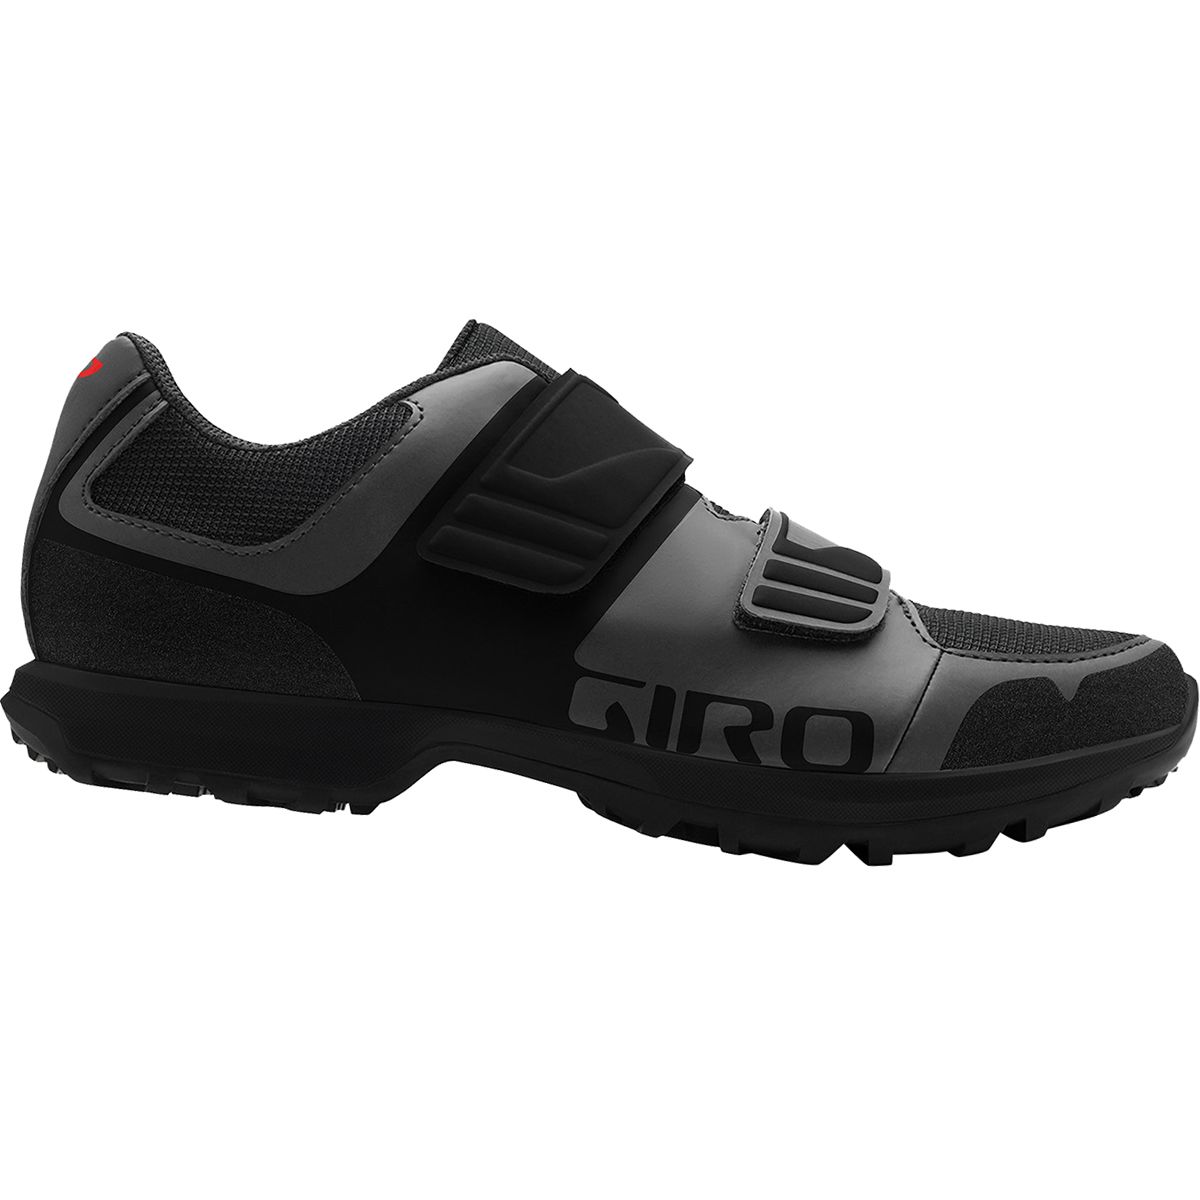 Giro Berm Mountain Bike Shoe - Men's Dark Shadow/Black, 46.0